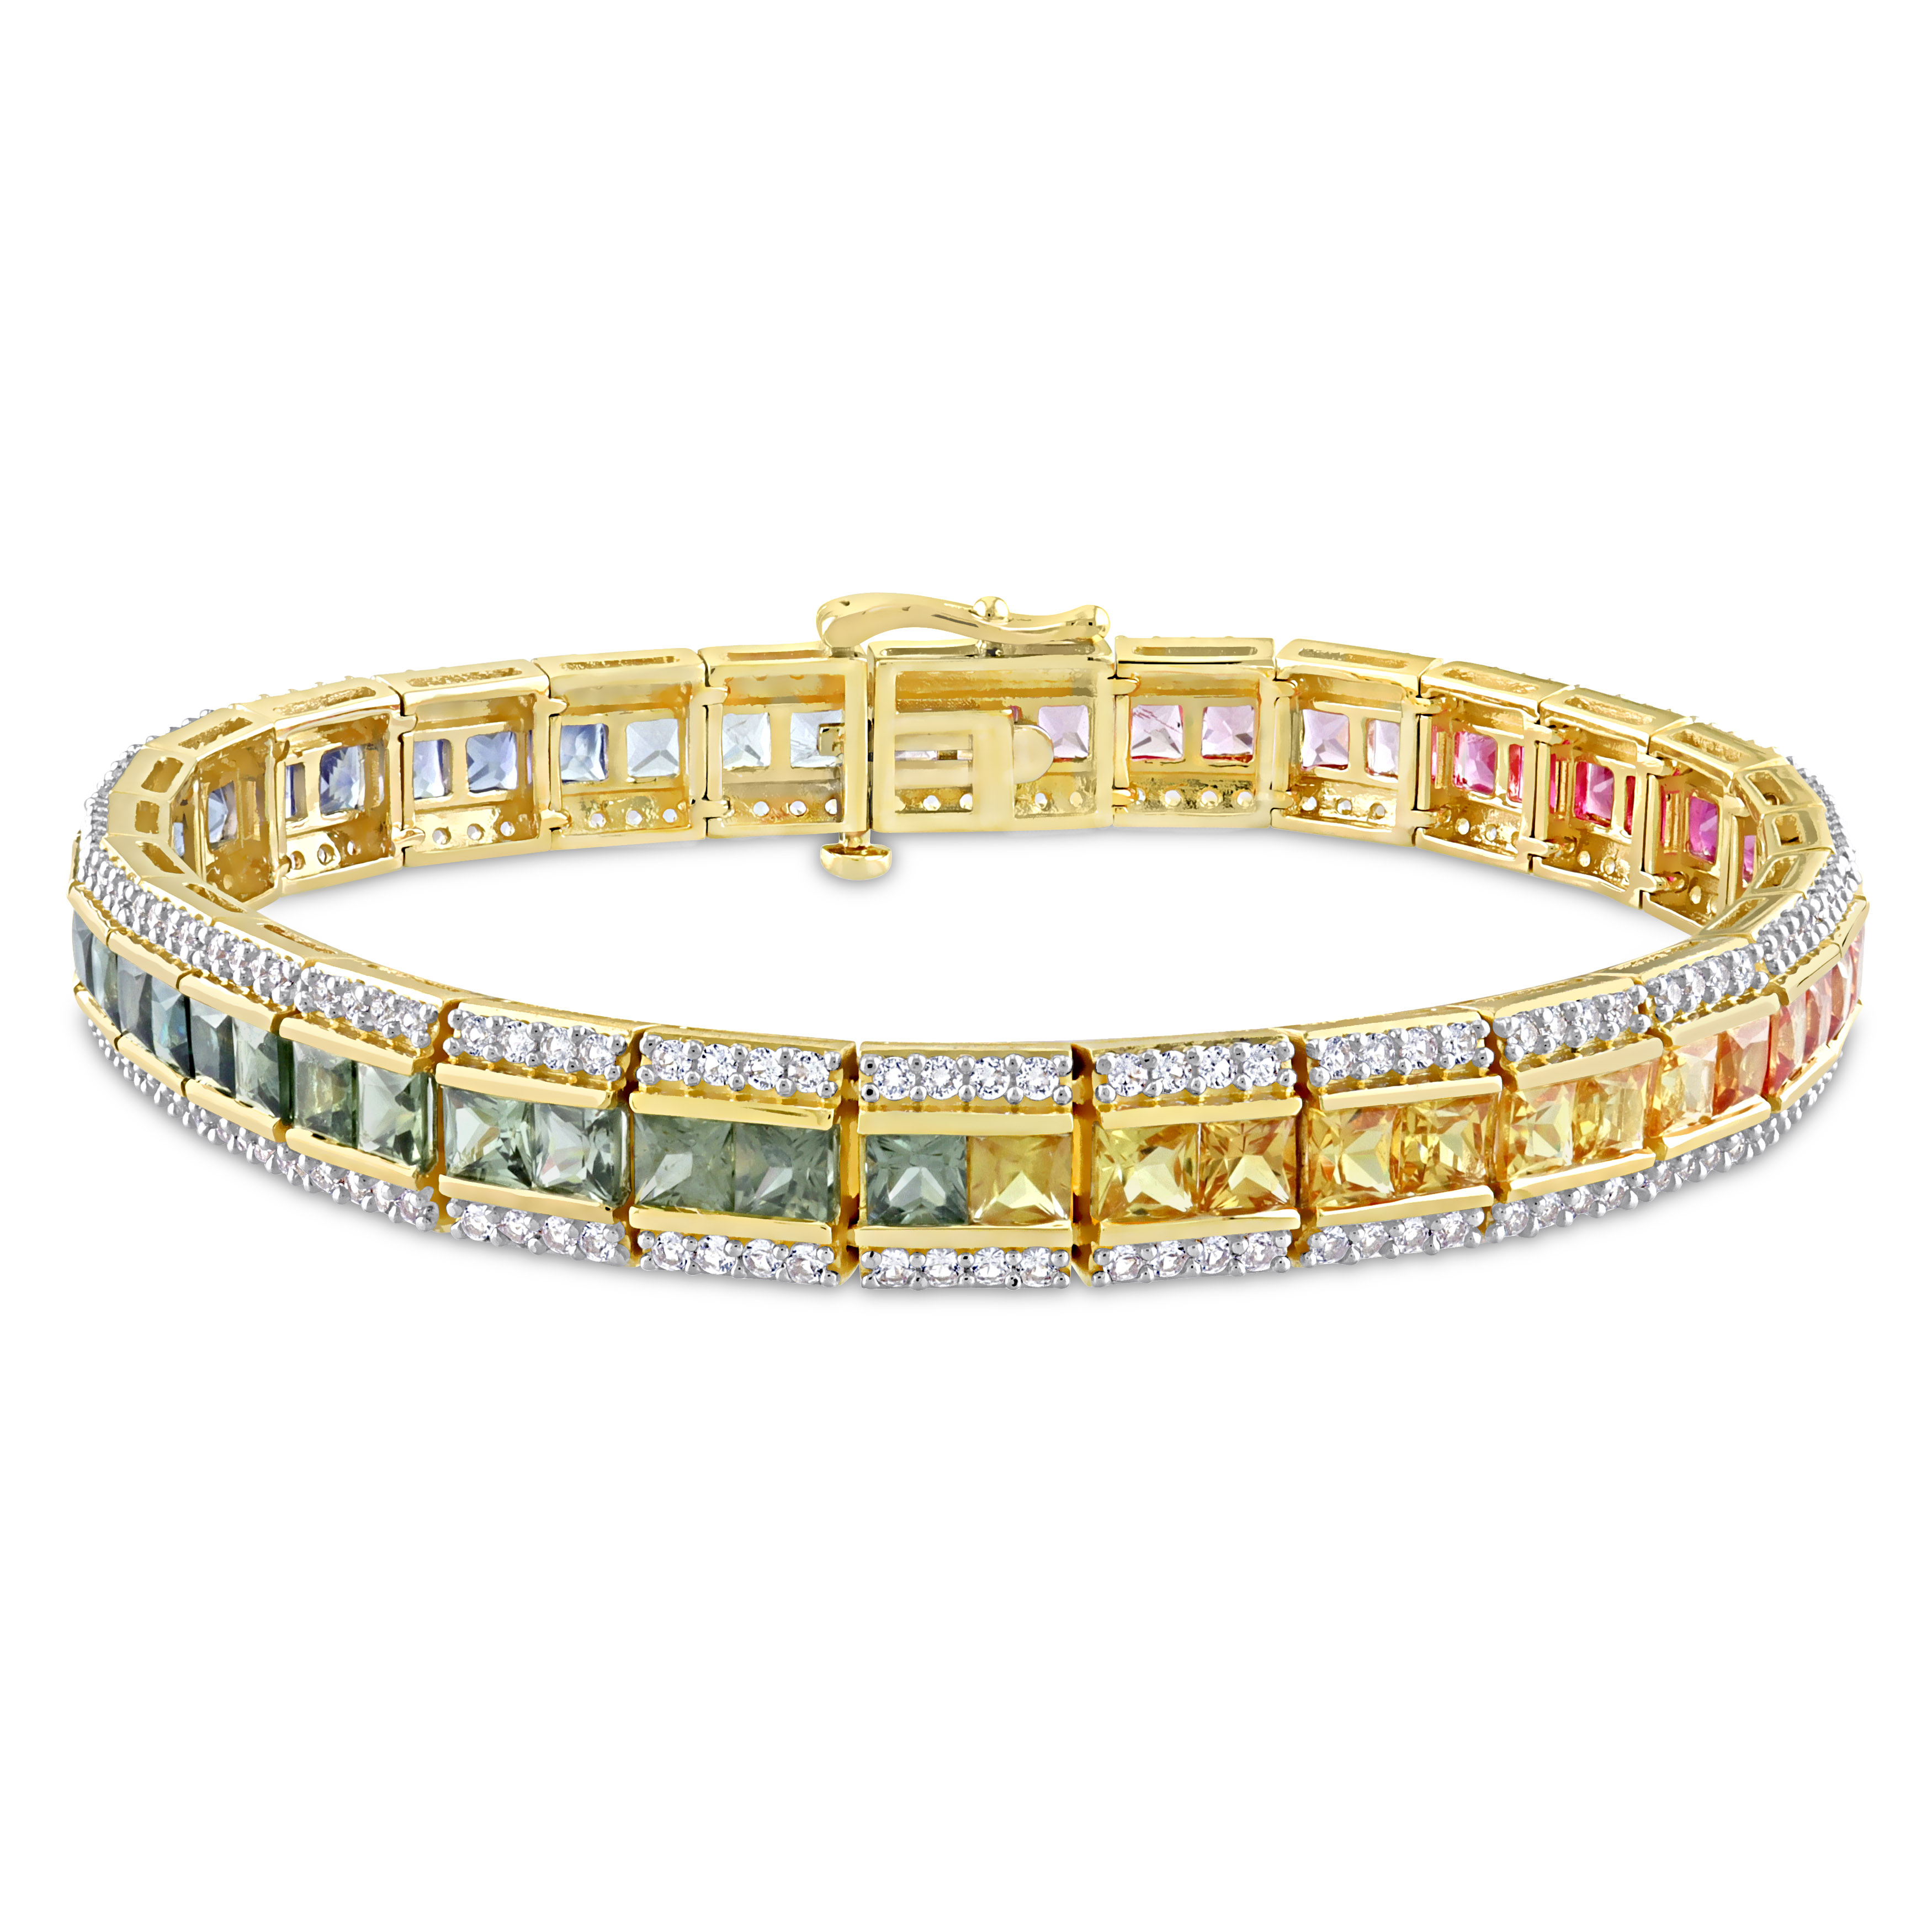 15 Carat Unique Diamond Tennis Bracelet for Men 14K Yellow Gold By Luxurman  000729